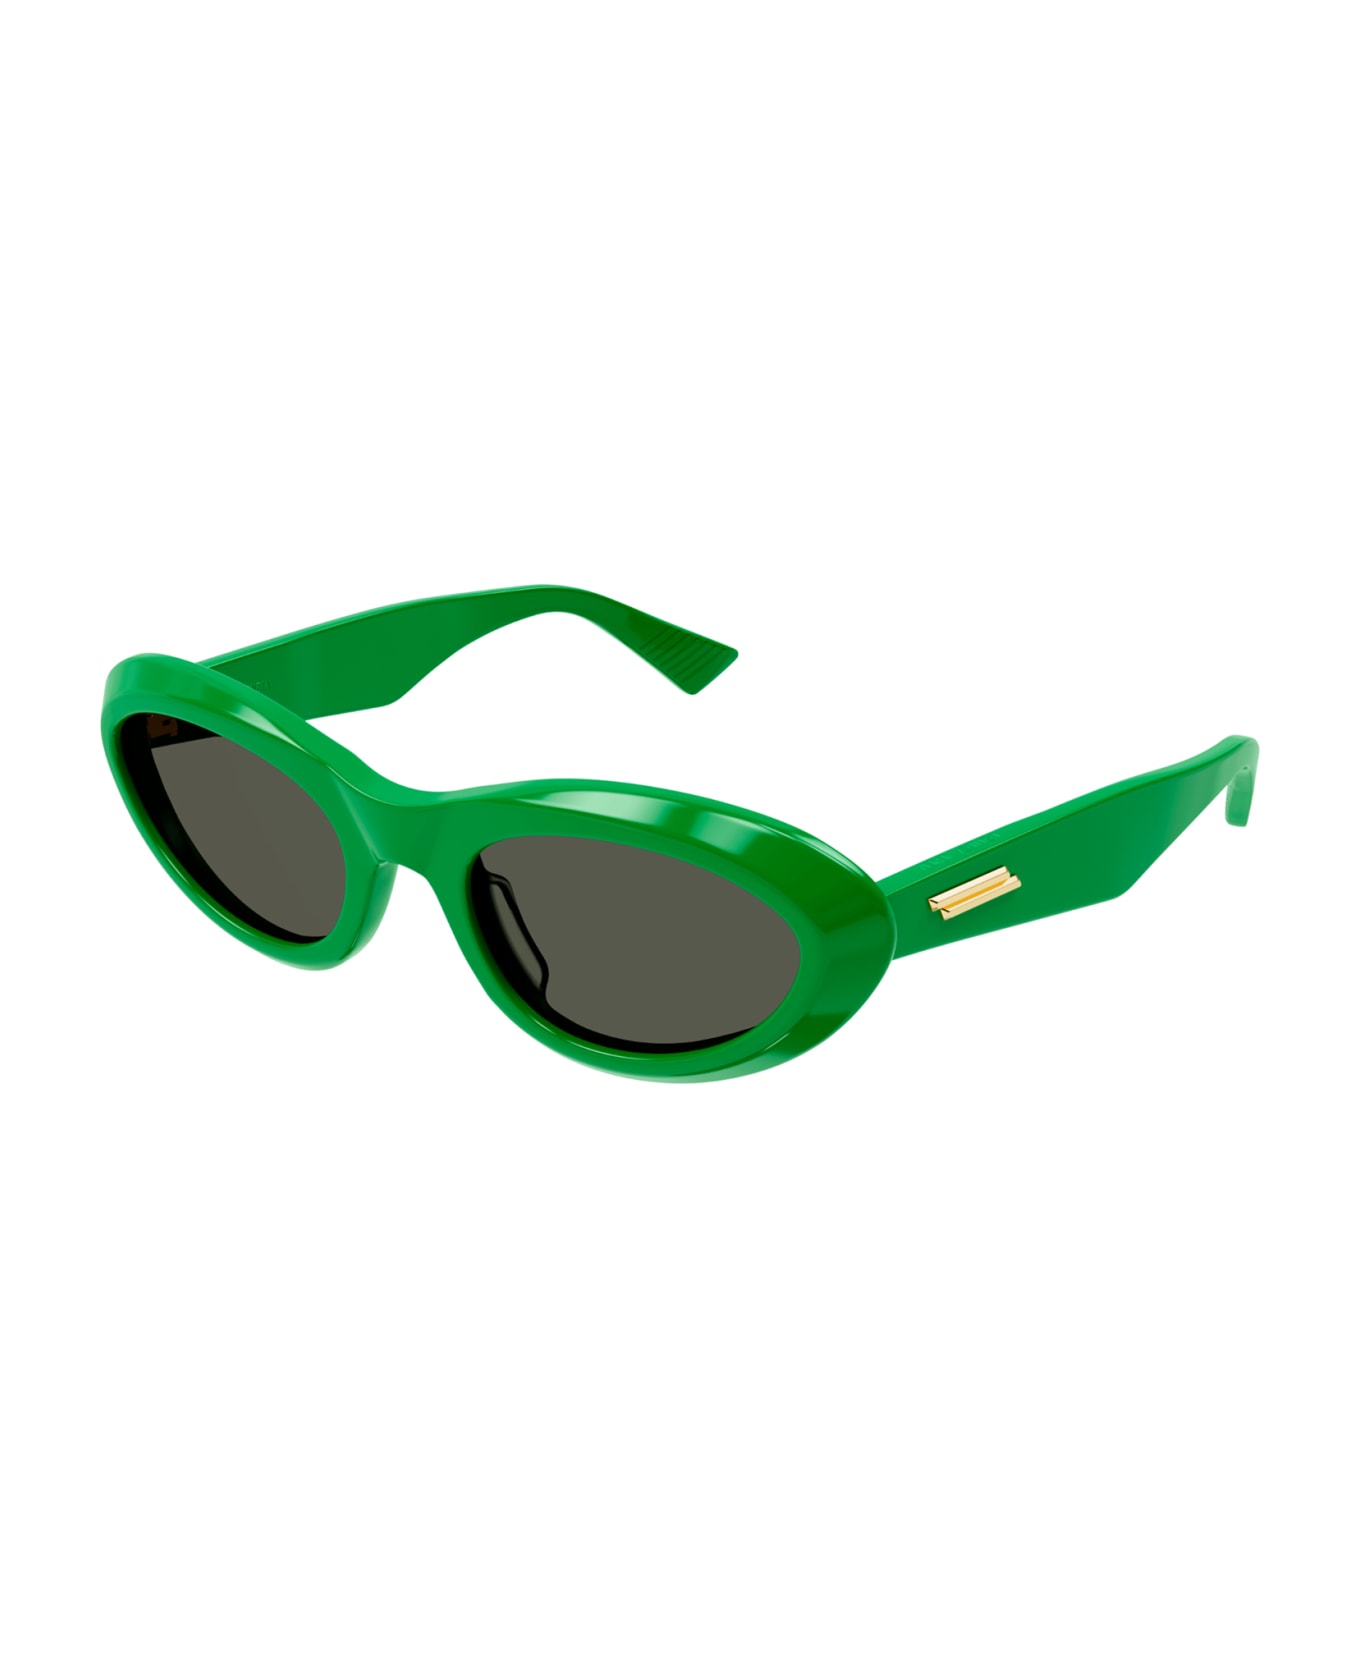 Bottega Veneta Eyewear 1egg4jb0a - 003 green green green サングラス